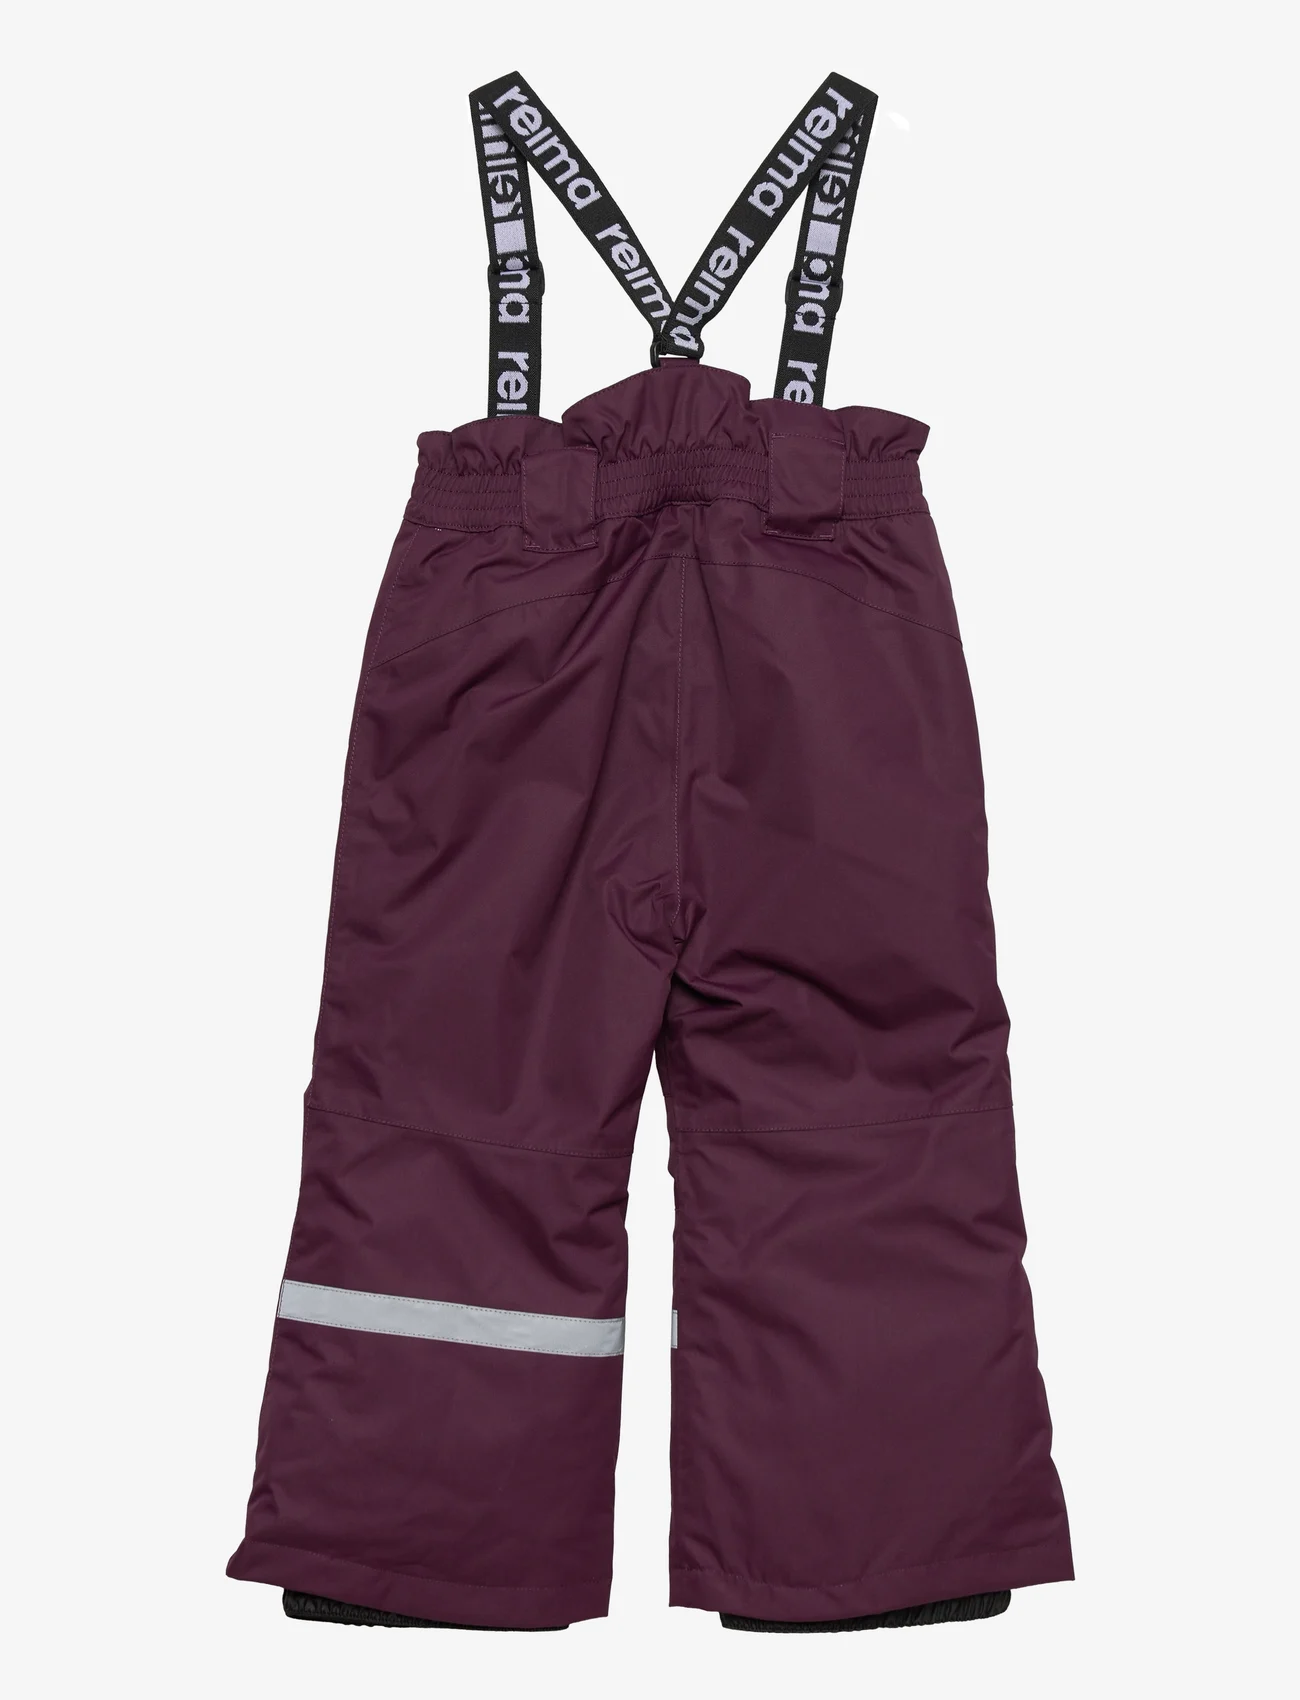 Reima - Kids' sku winter trousers Tuokio - winterhose - deep purple - 1